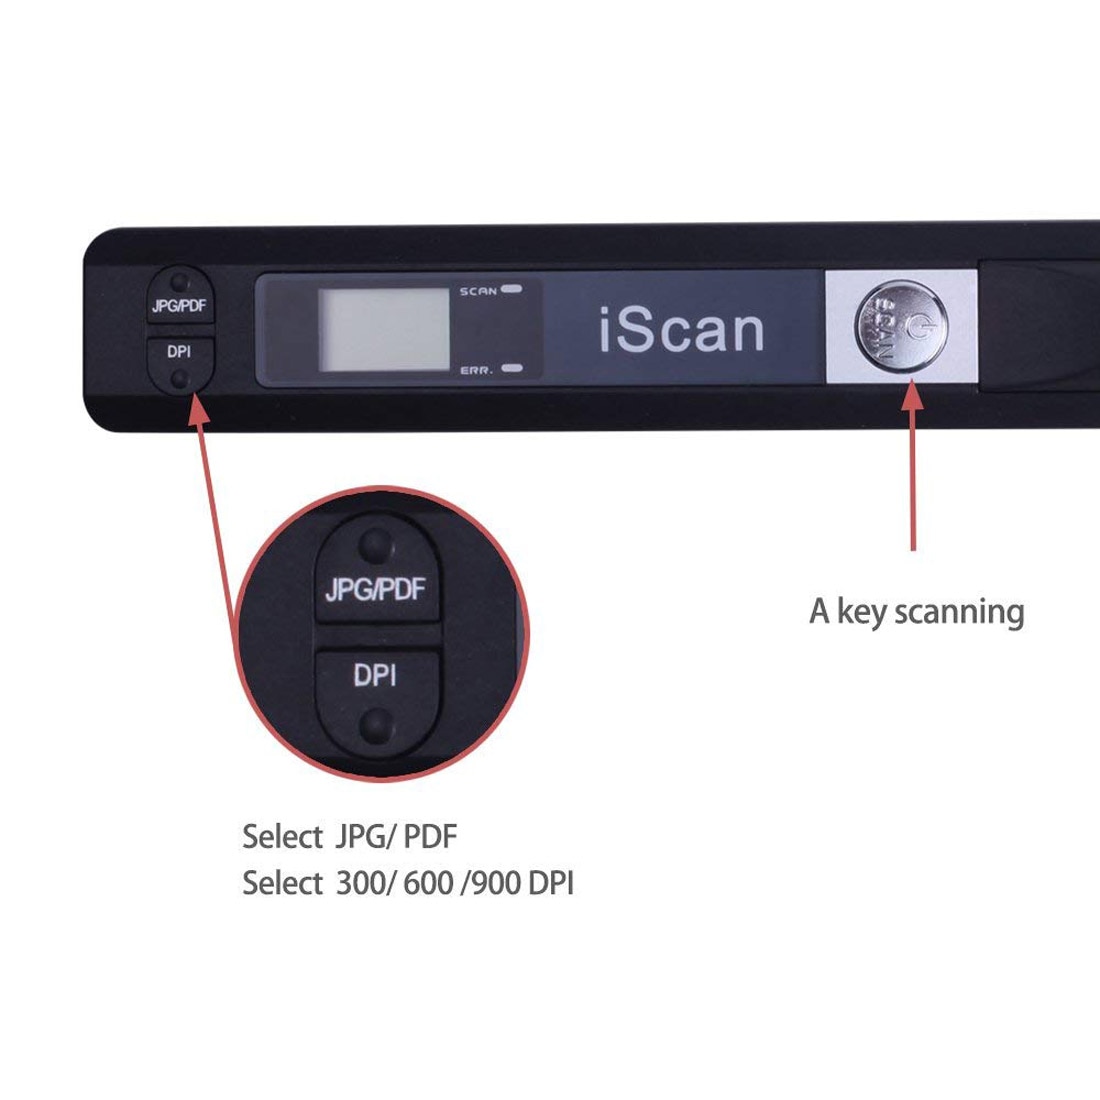 Mini bærbar scanner 900 dpi lcd-skærm jpg / pdf-format dokumentbillede iscan håndholdt scanner med 32g micro sd / tf flash-kort